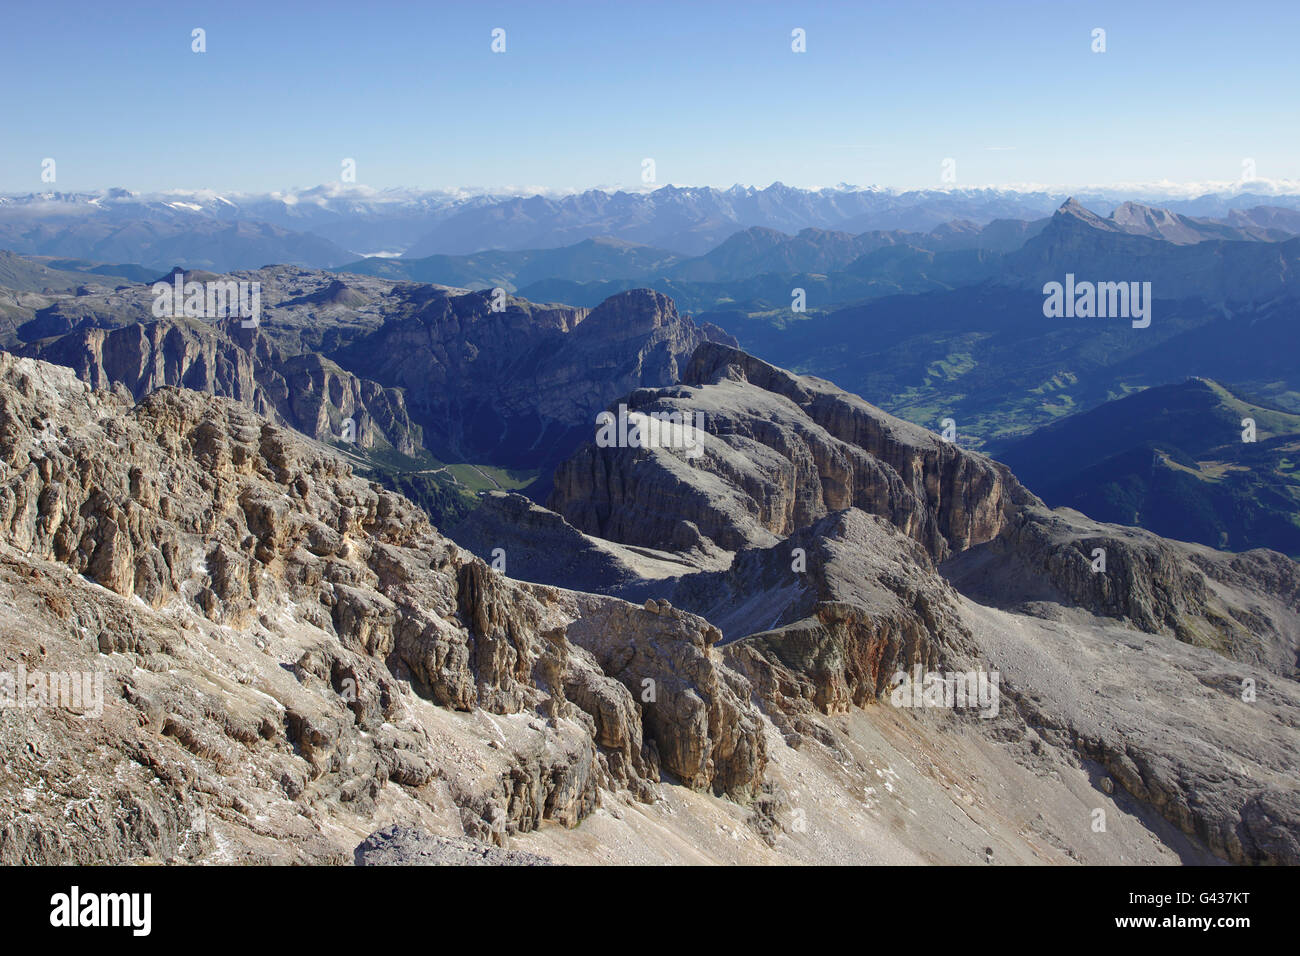 View from Piz Boe (Sella) over Vallonspitze, Neuner, Zehner, Boe-Seekofel (Sella), Sass Songher (Puez), Dolomites, Italy Stock Photo